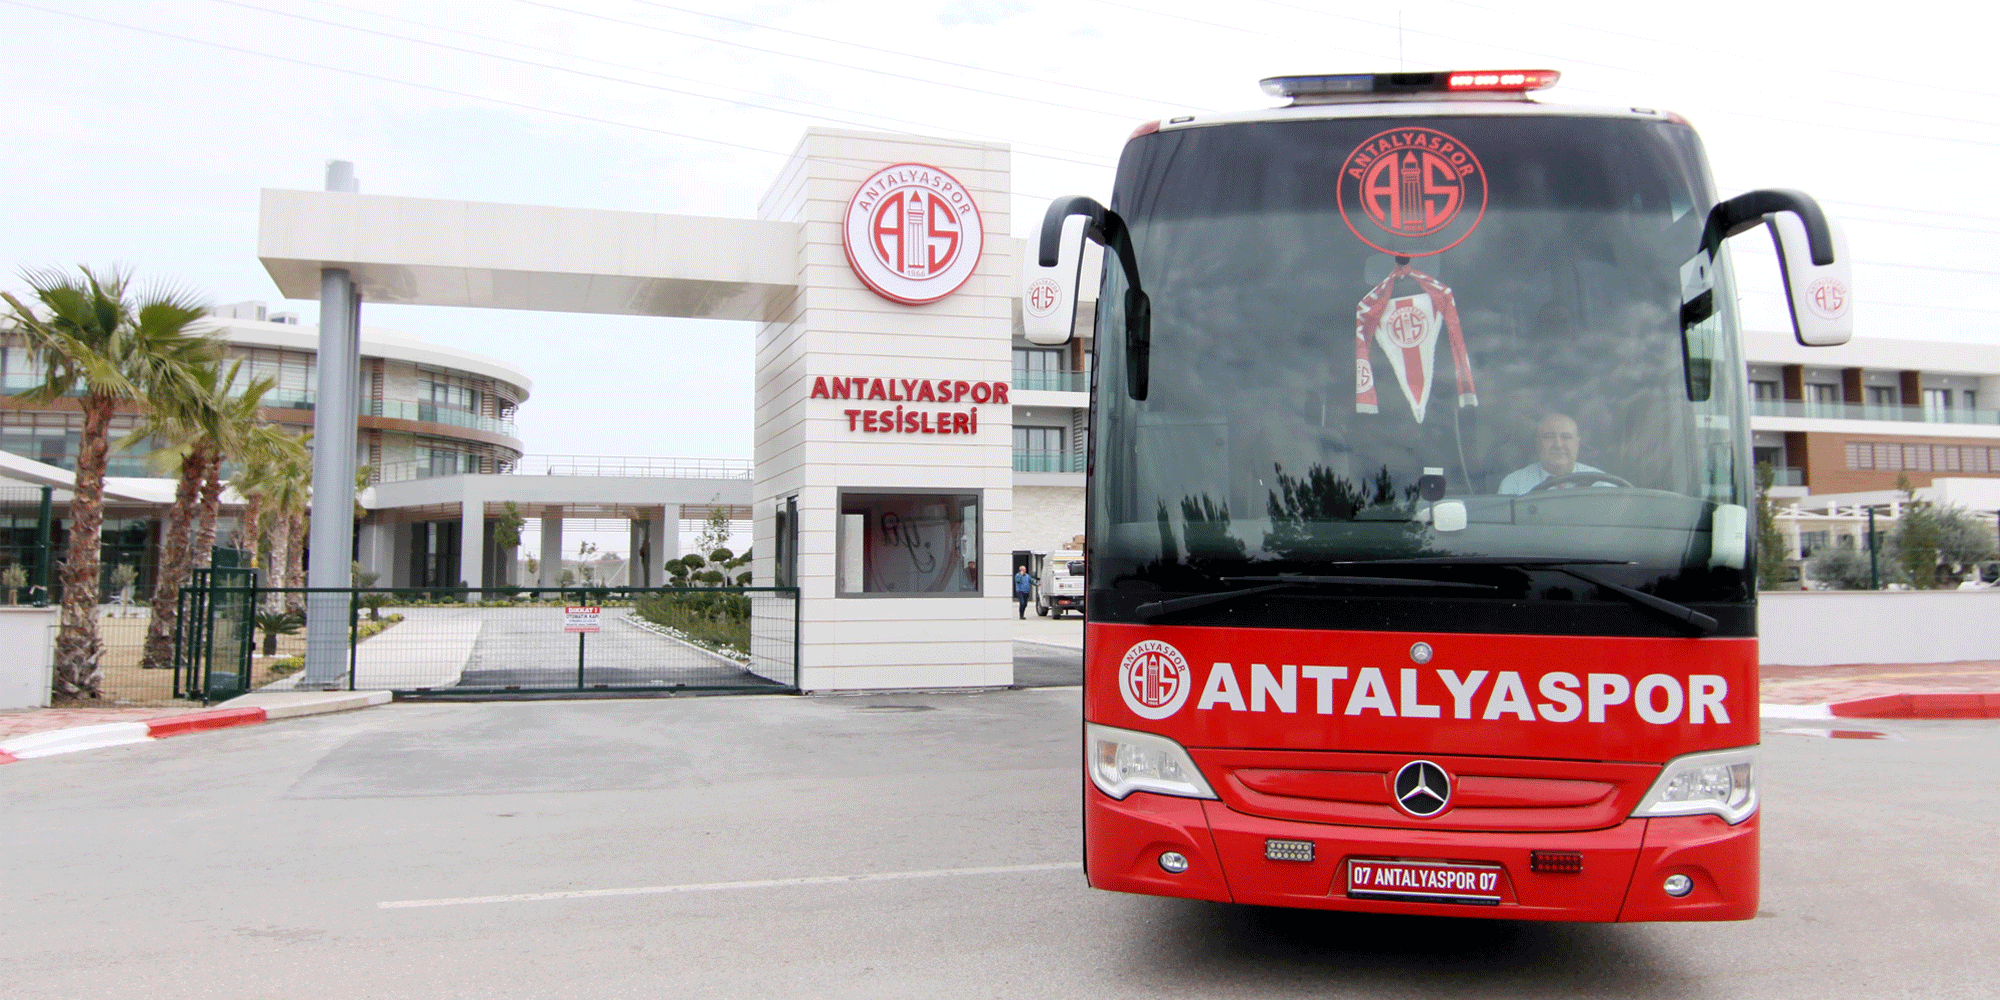 Antalyasporumuz Konya Yolunda